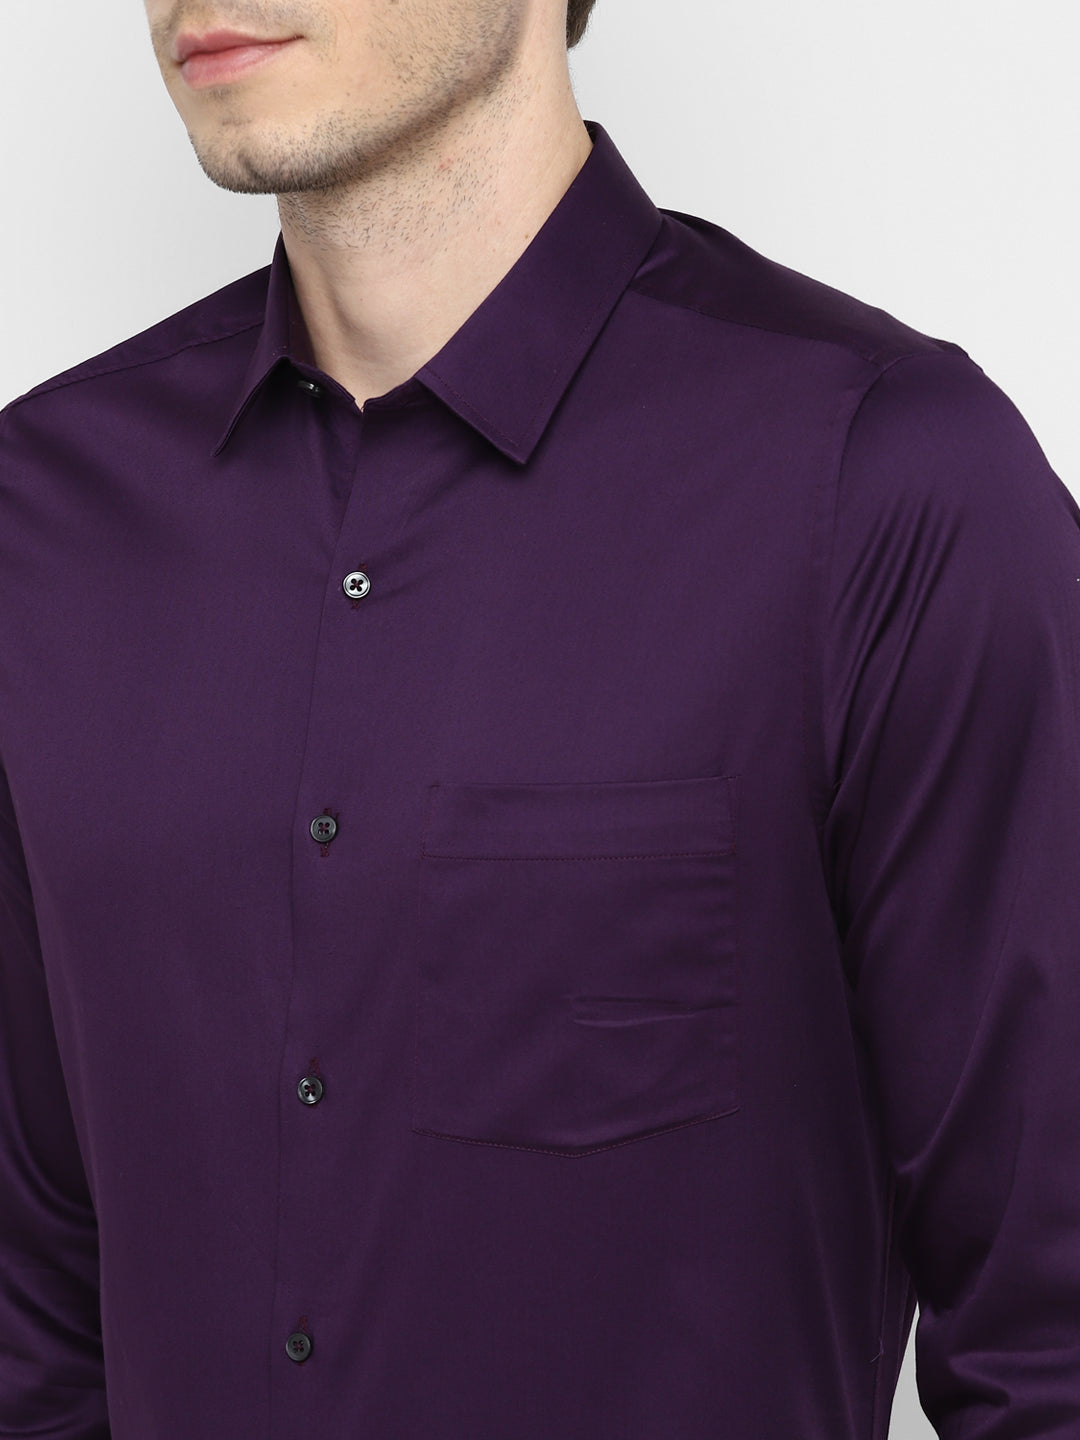 Solid Purple Slim Fit Formal Shirt